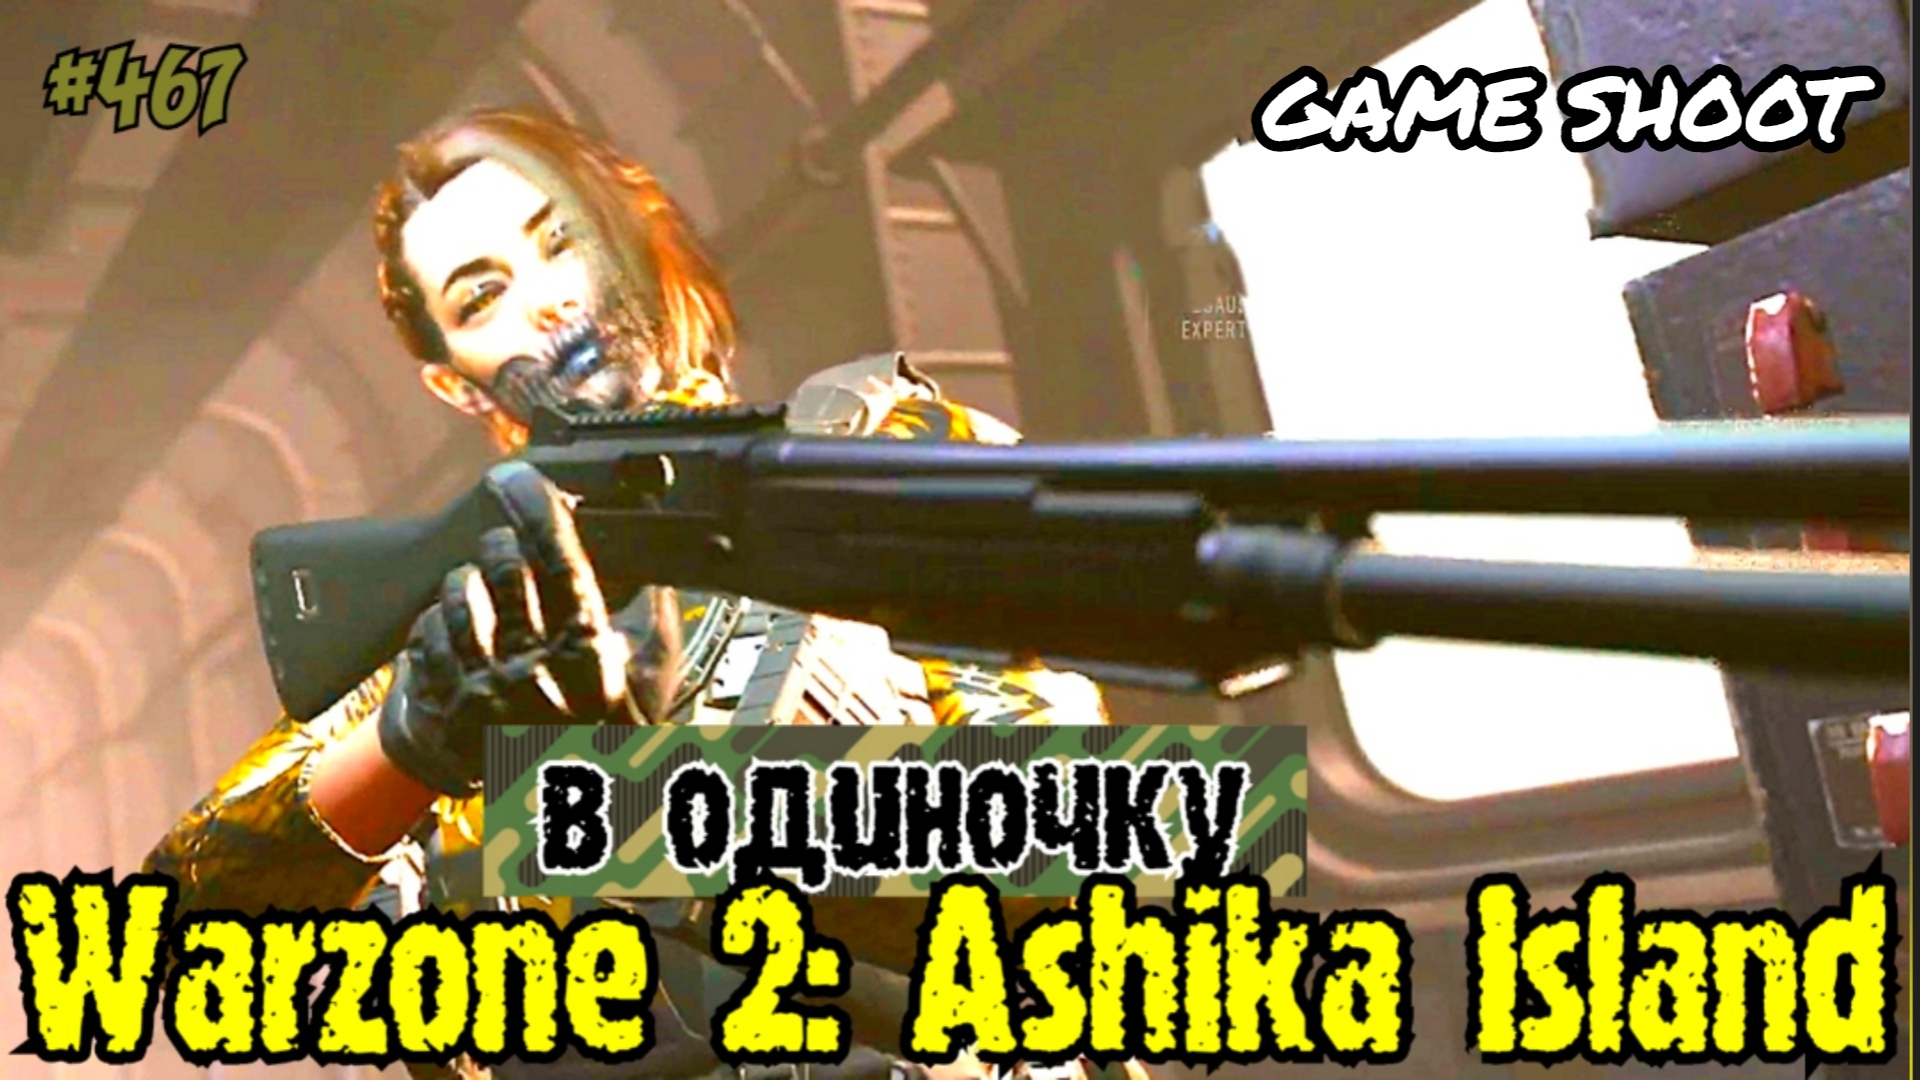 Warzone 2: Ashika Island [в одиночку] #467 Game Shoot